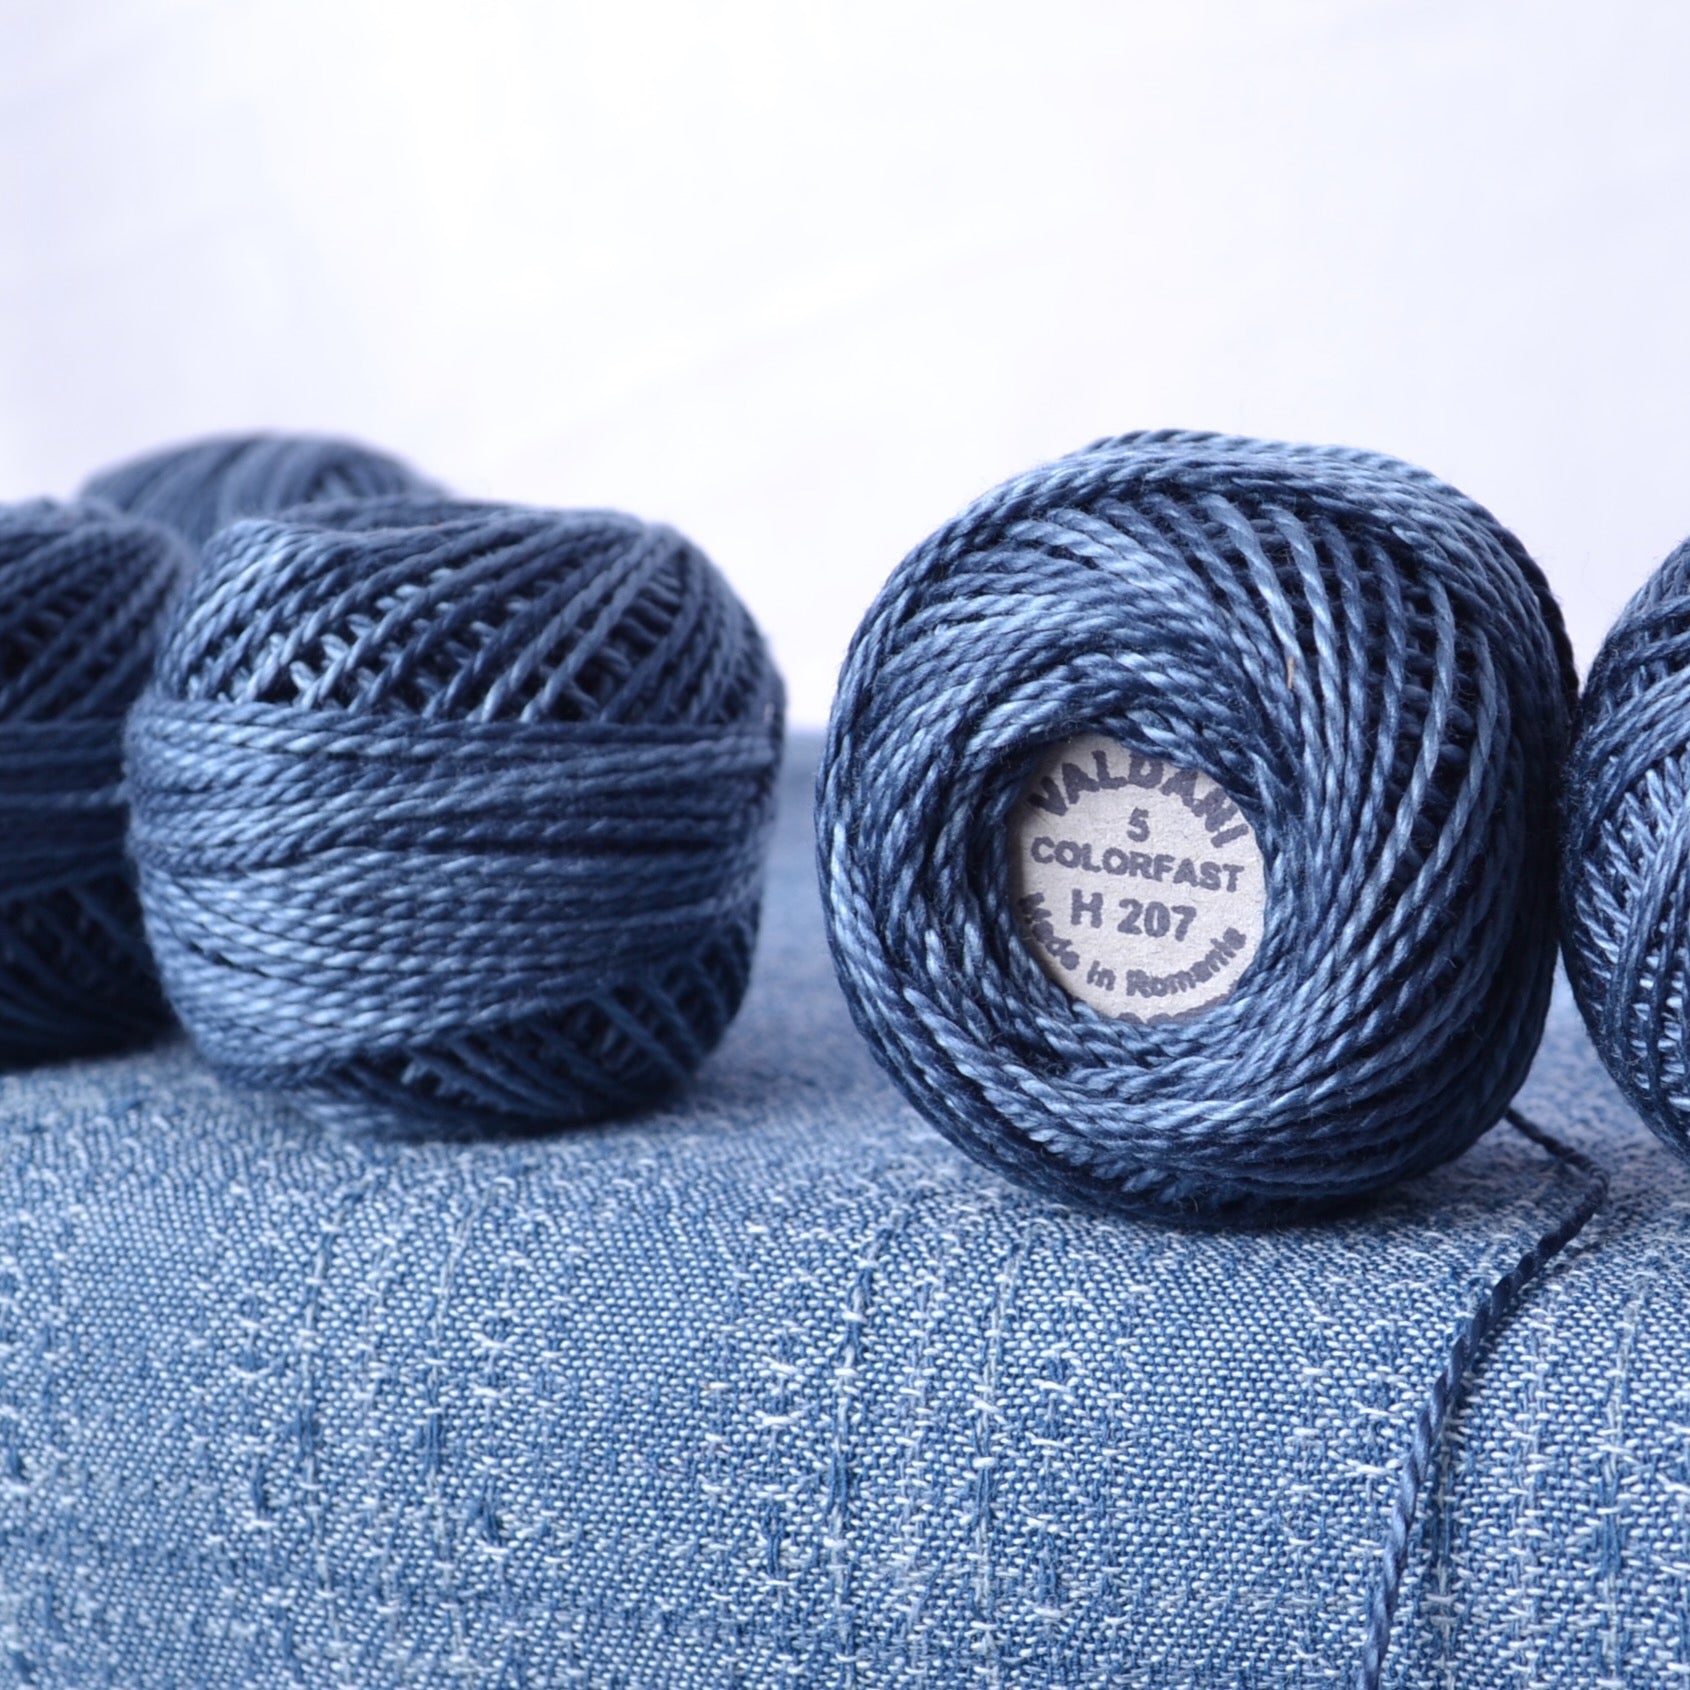 Valdani darkened blue #5 perle cotton thread